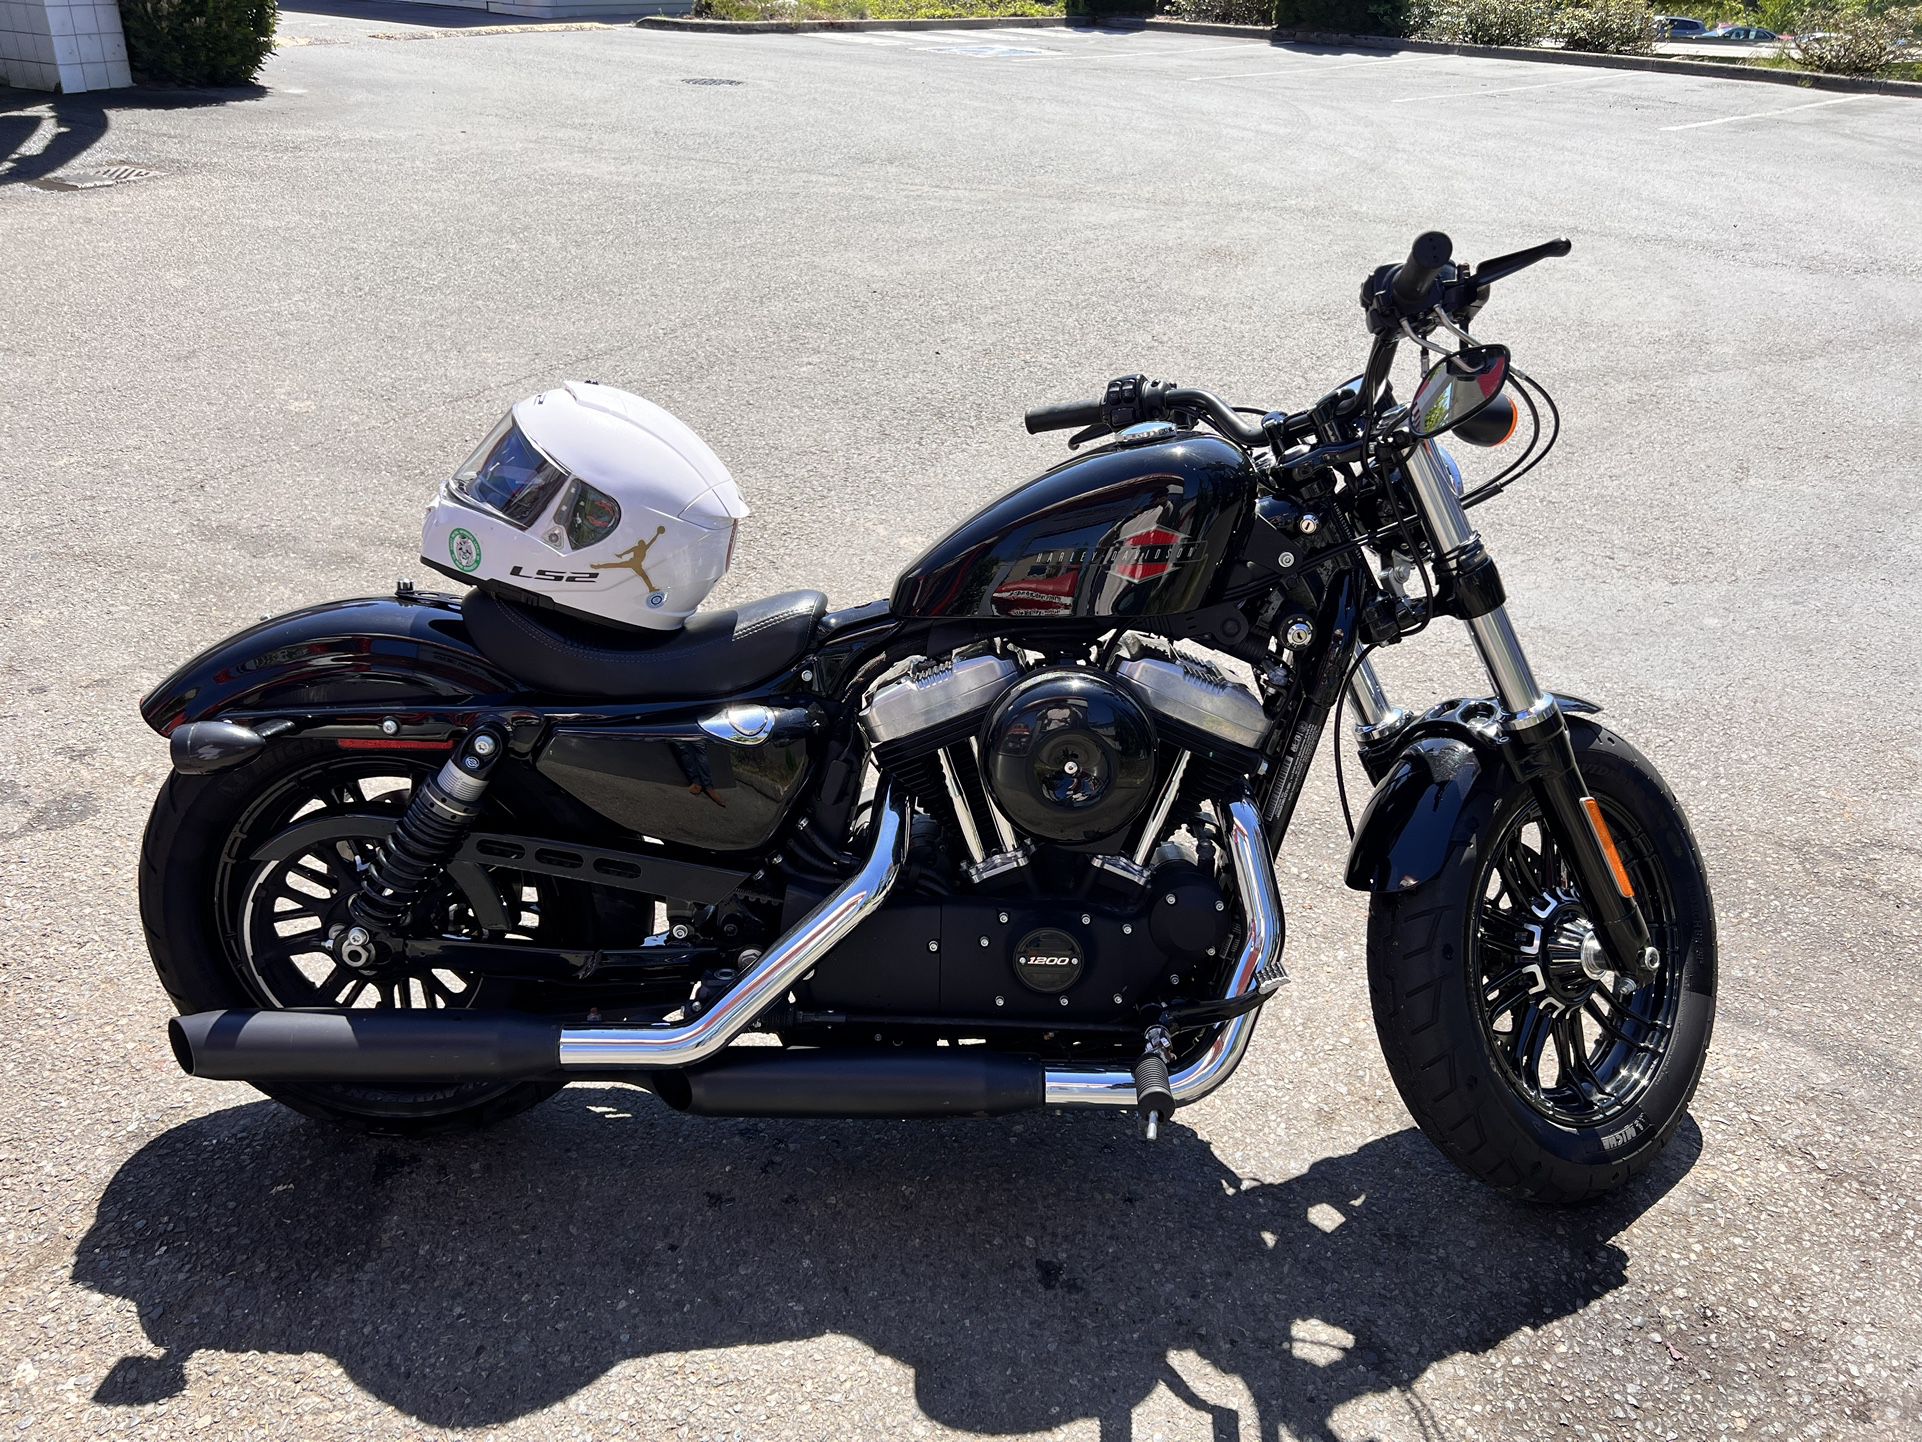 2019 Harley Davidson Xl1200